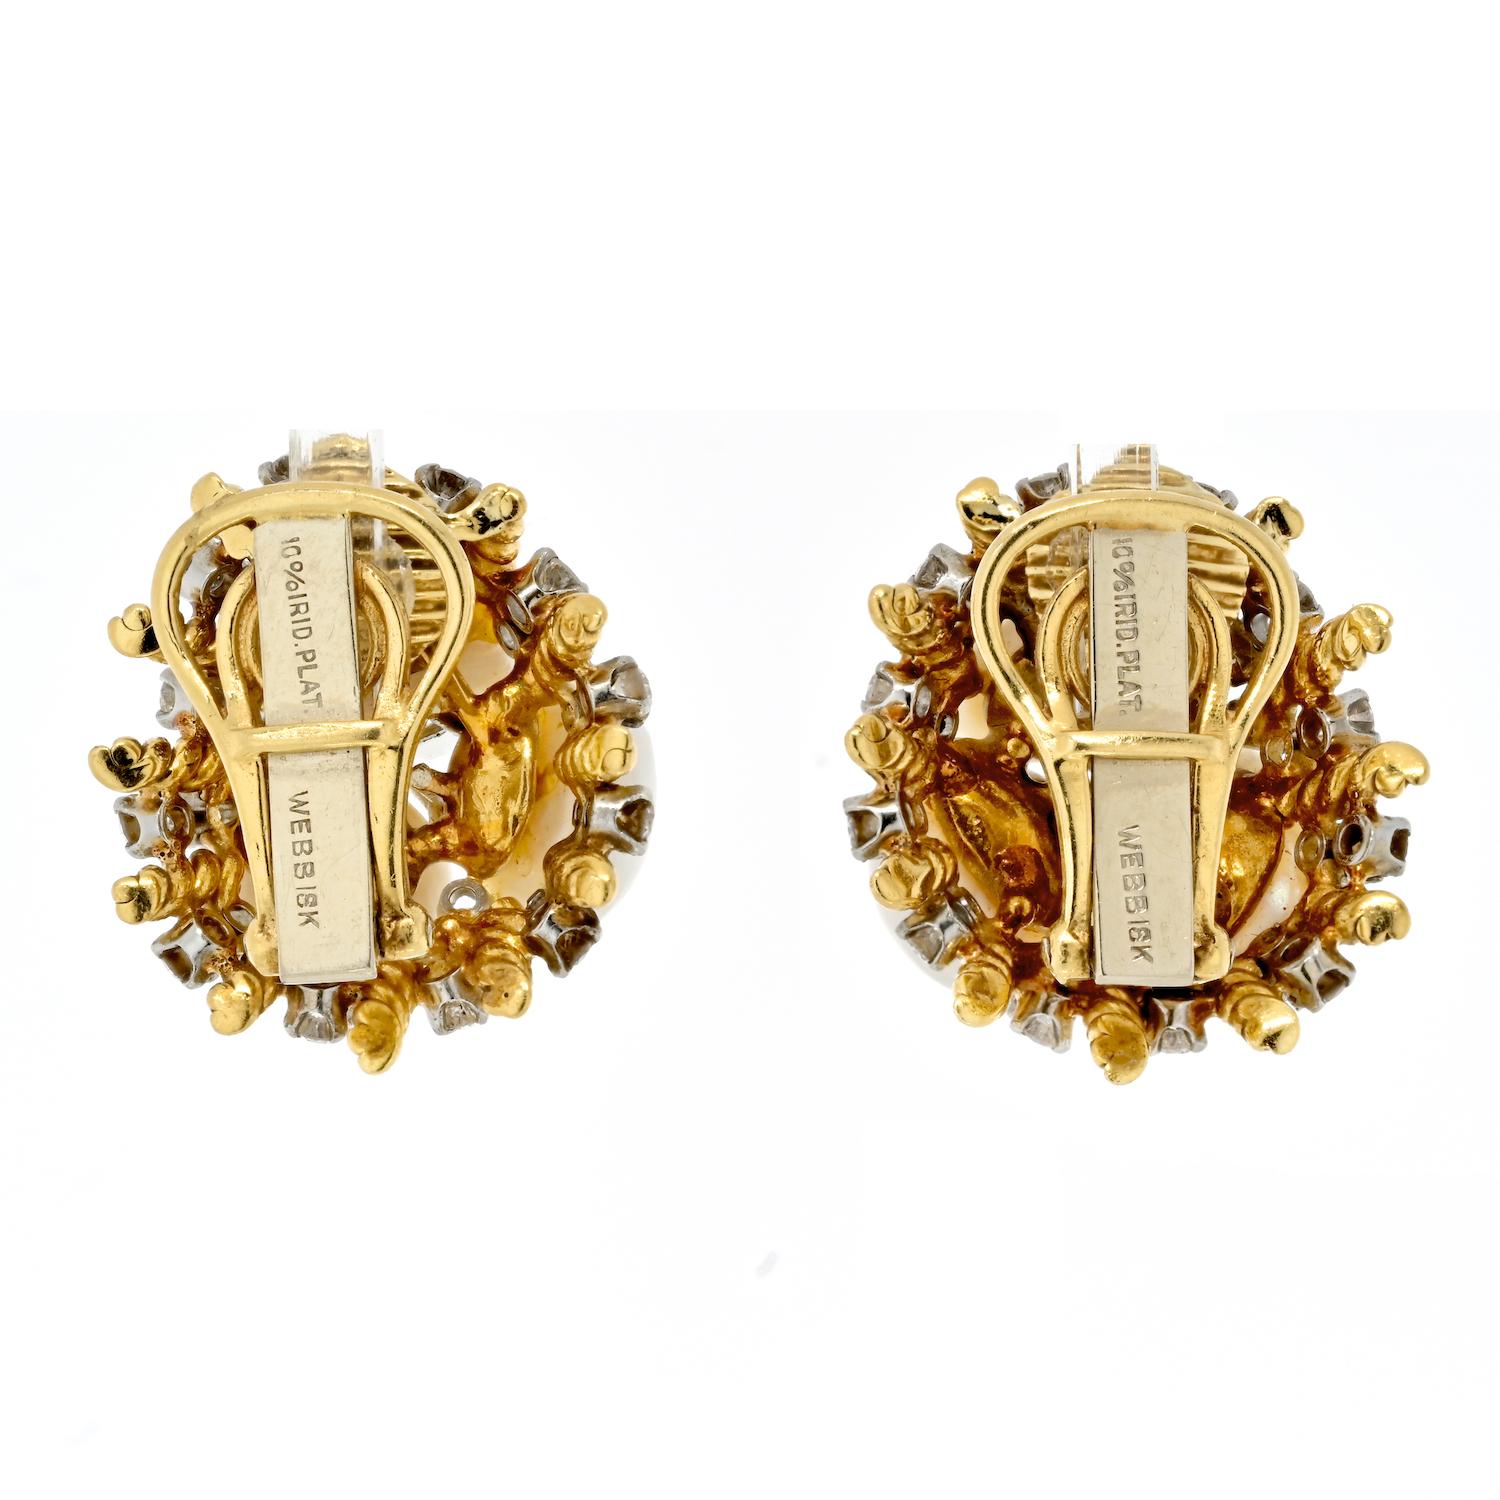 A David David Platinum & 18k Yellow Gold Diamond, Pearl, Dome Style Clip On Earring Excellent état - En vente à New York, NY